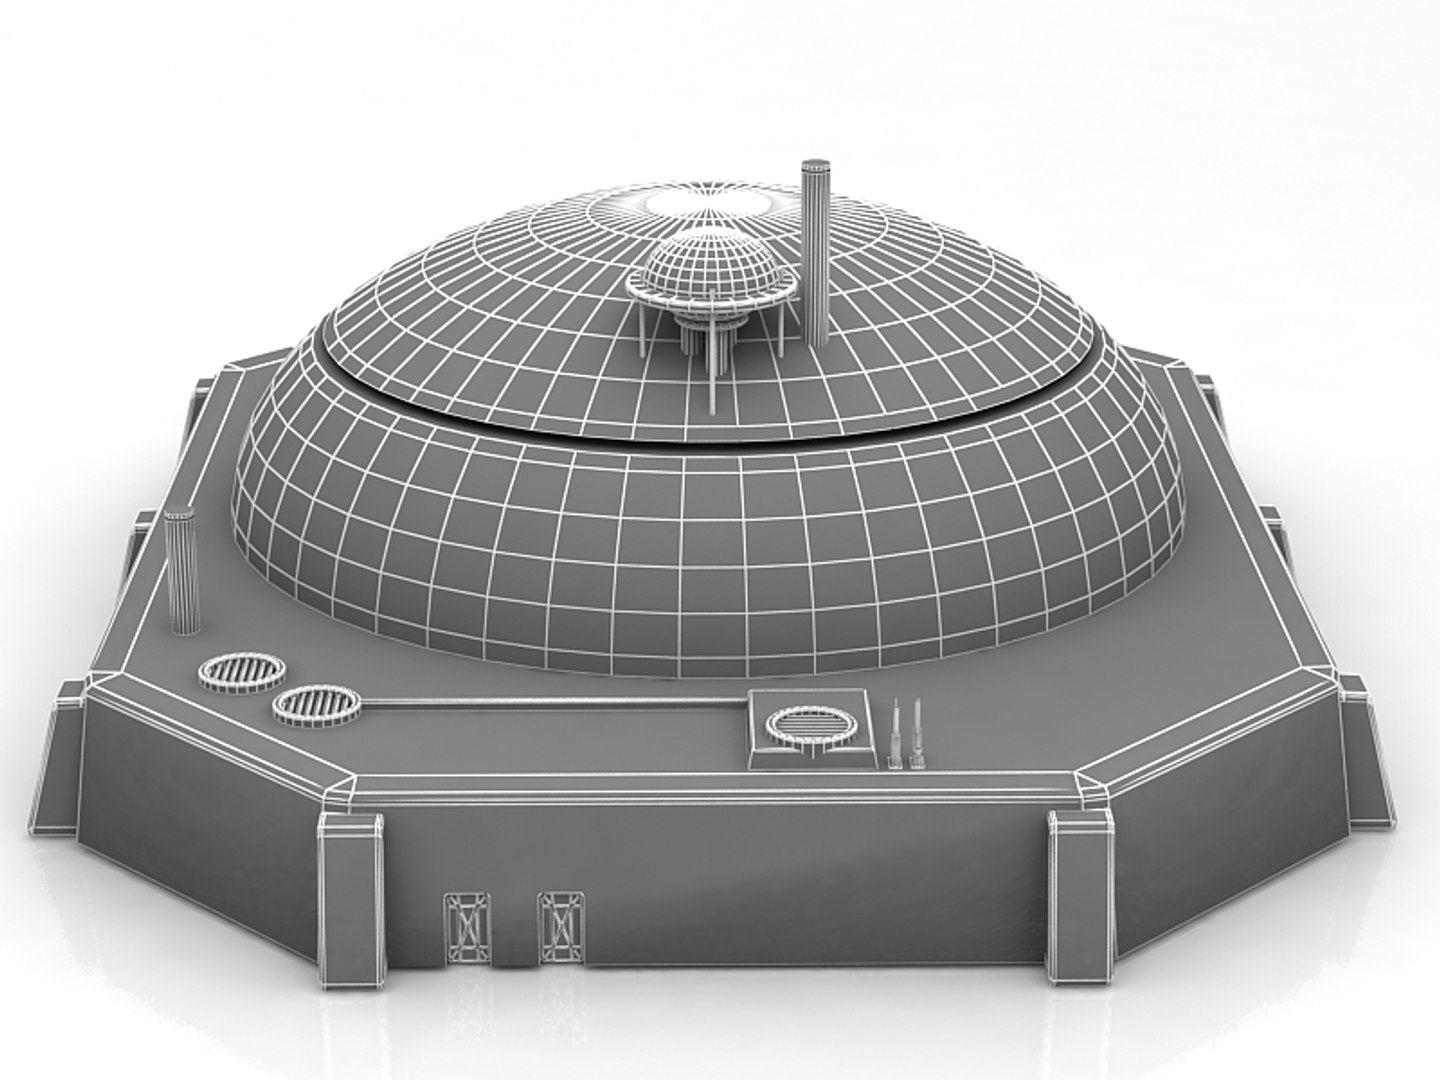 Mos eisley architecture sci-fi building 3D model - TurboSquid 1643063